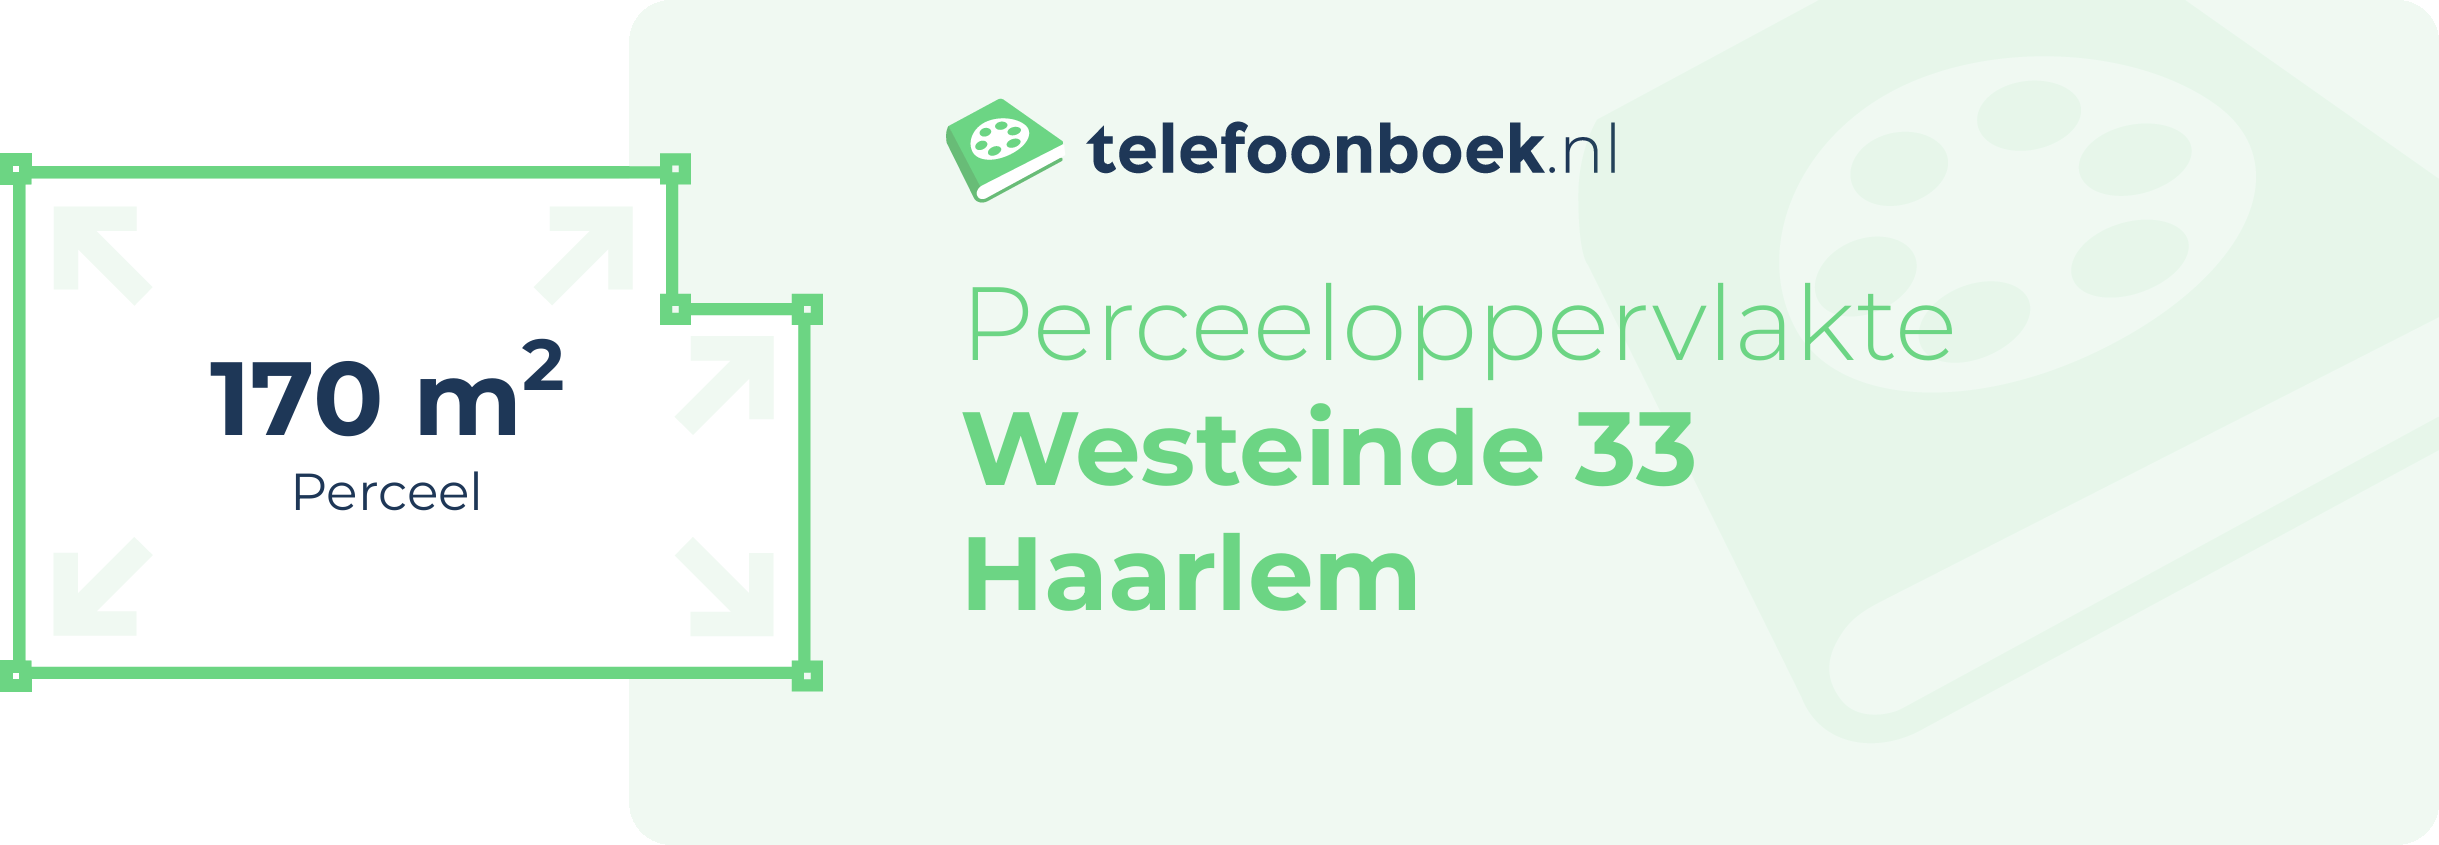 Perceeloppervlakte Westeinde 33 Haarlem